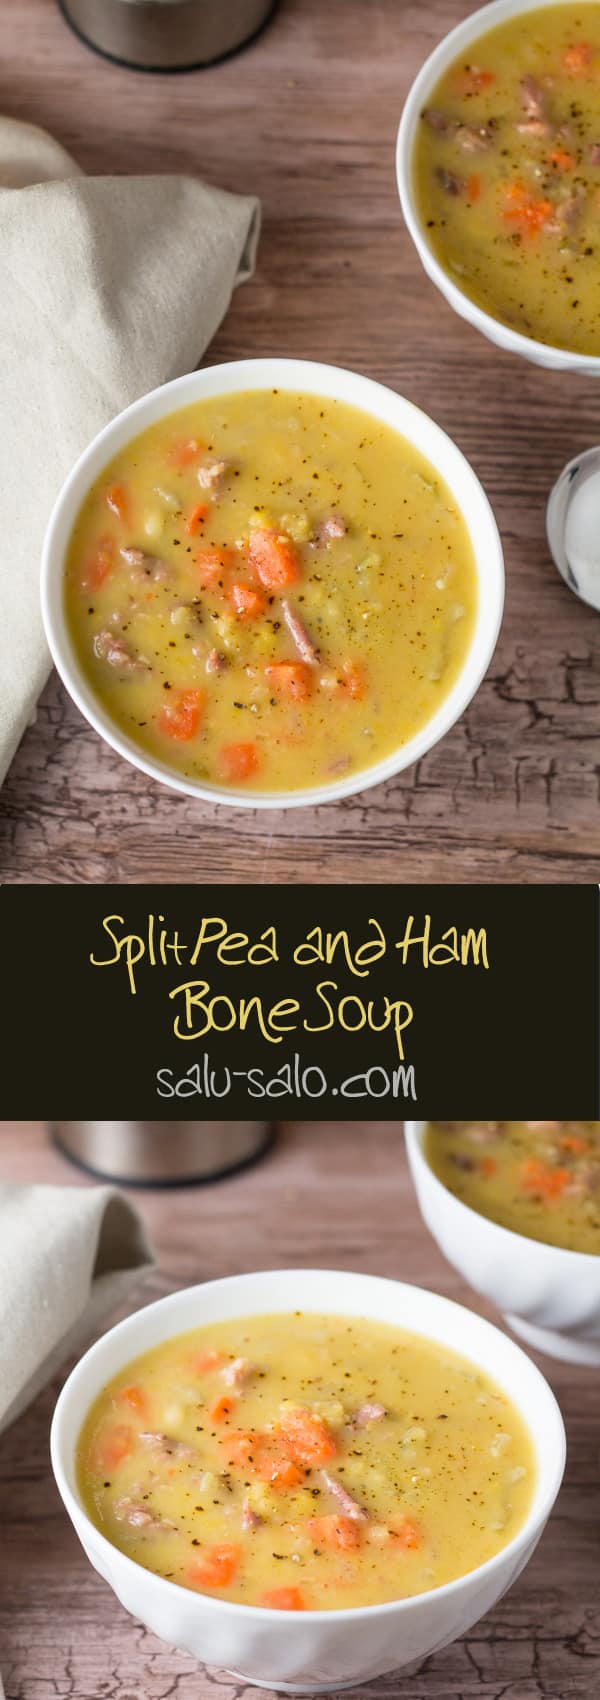 Split Pea and Ham Bone Soup